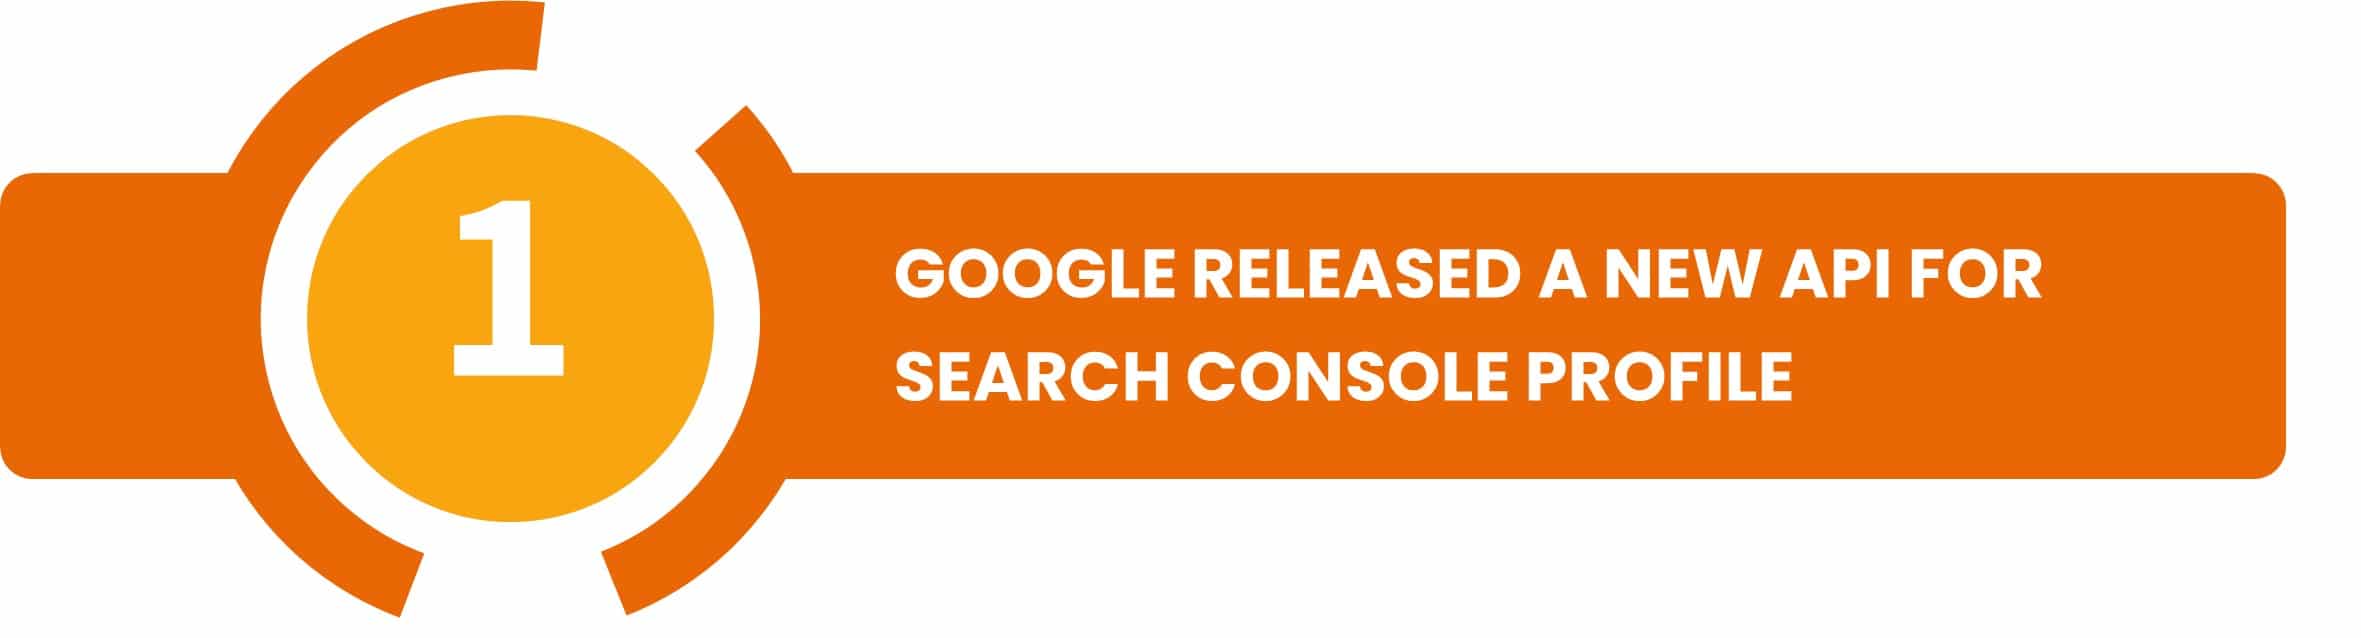 Google Released a New API for Search Console Profile